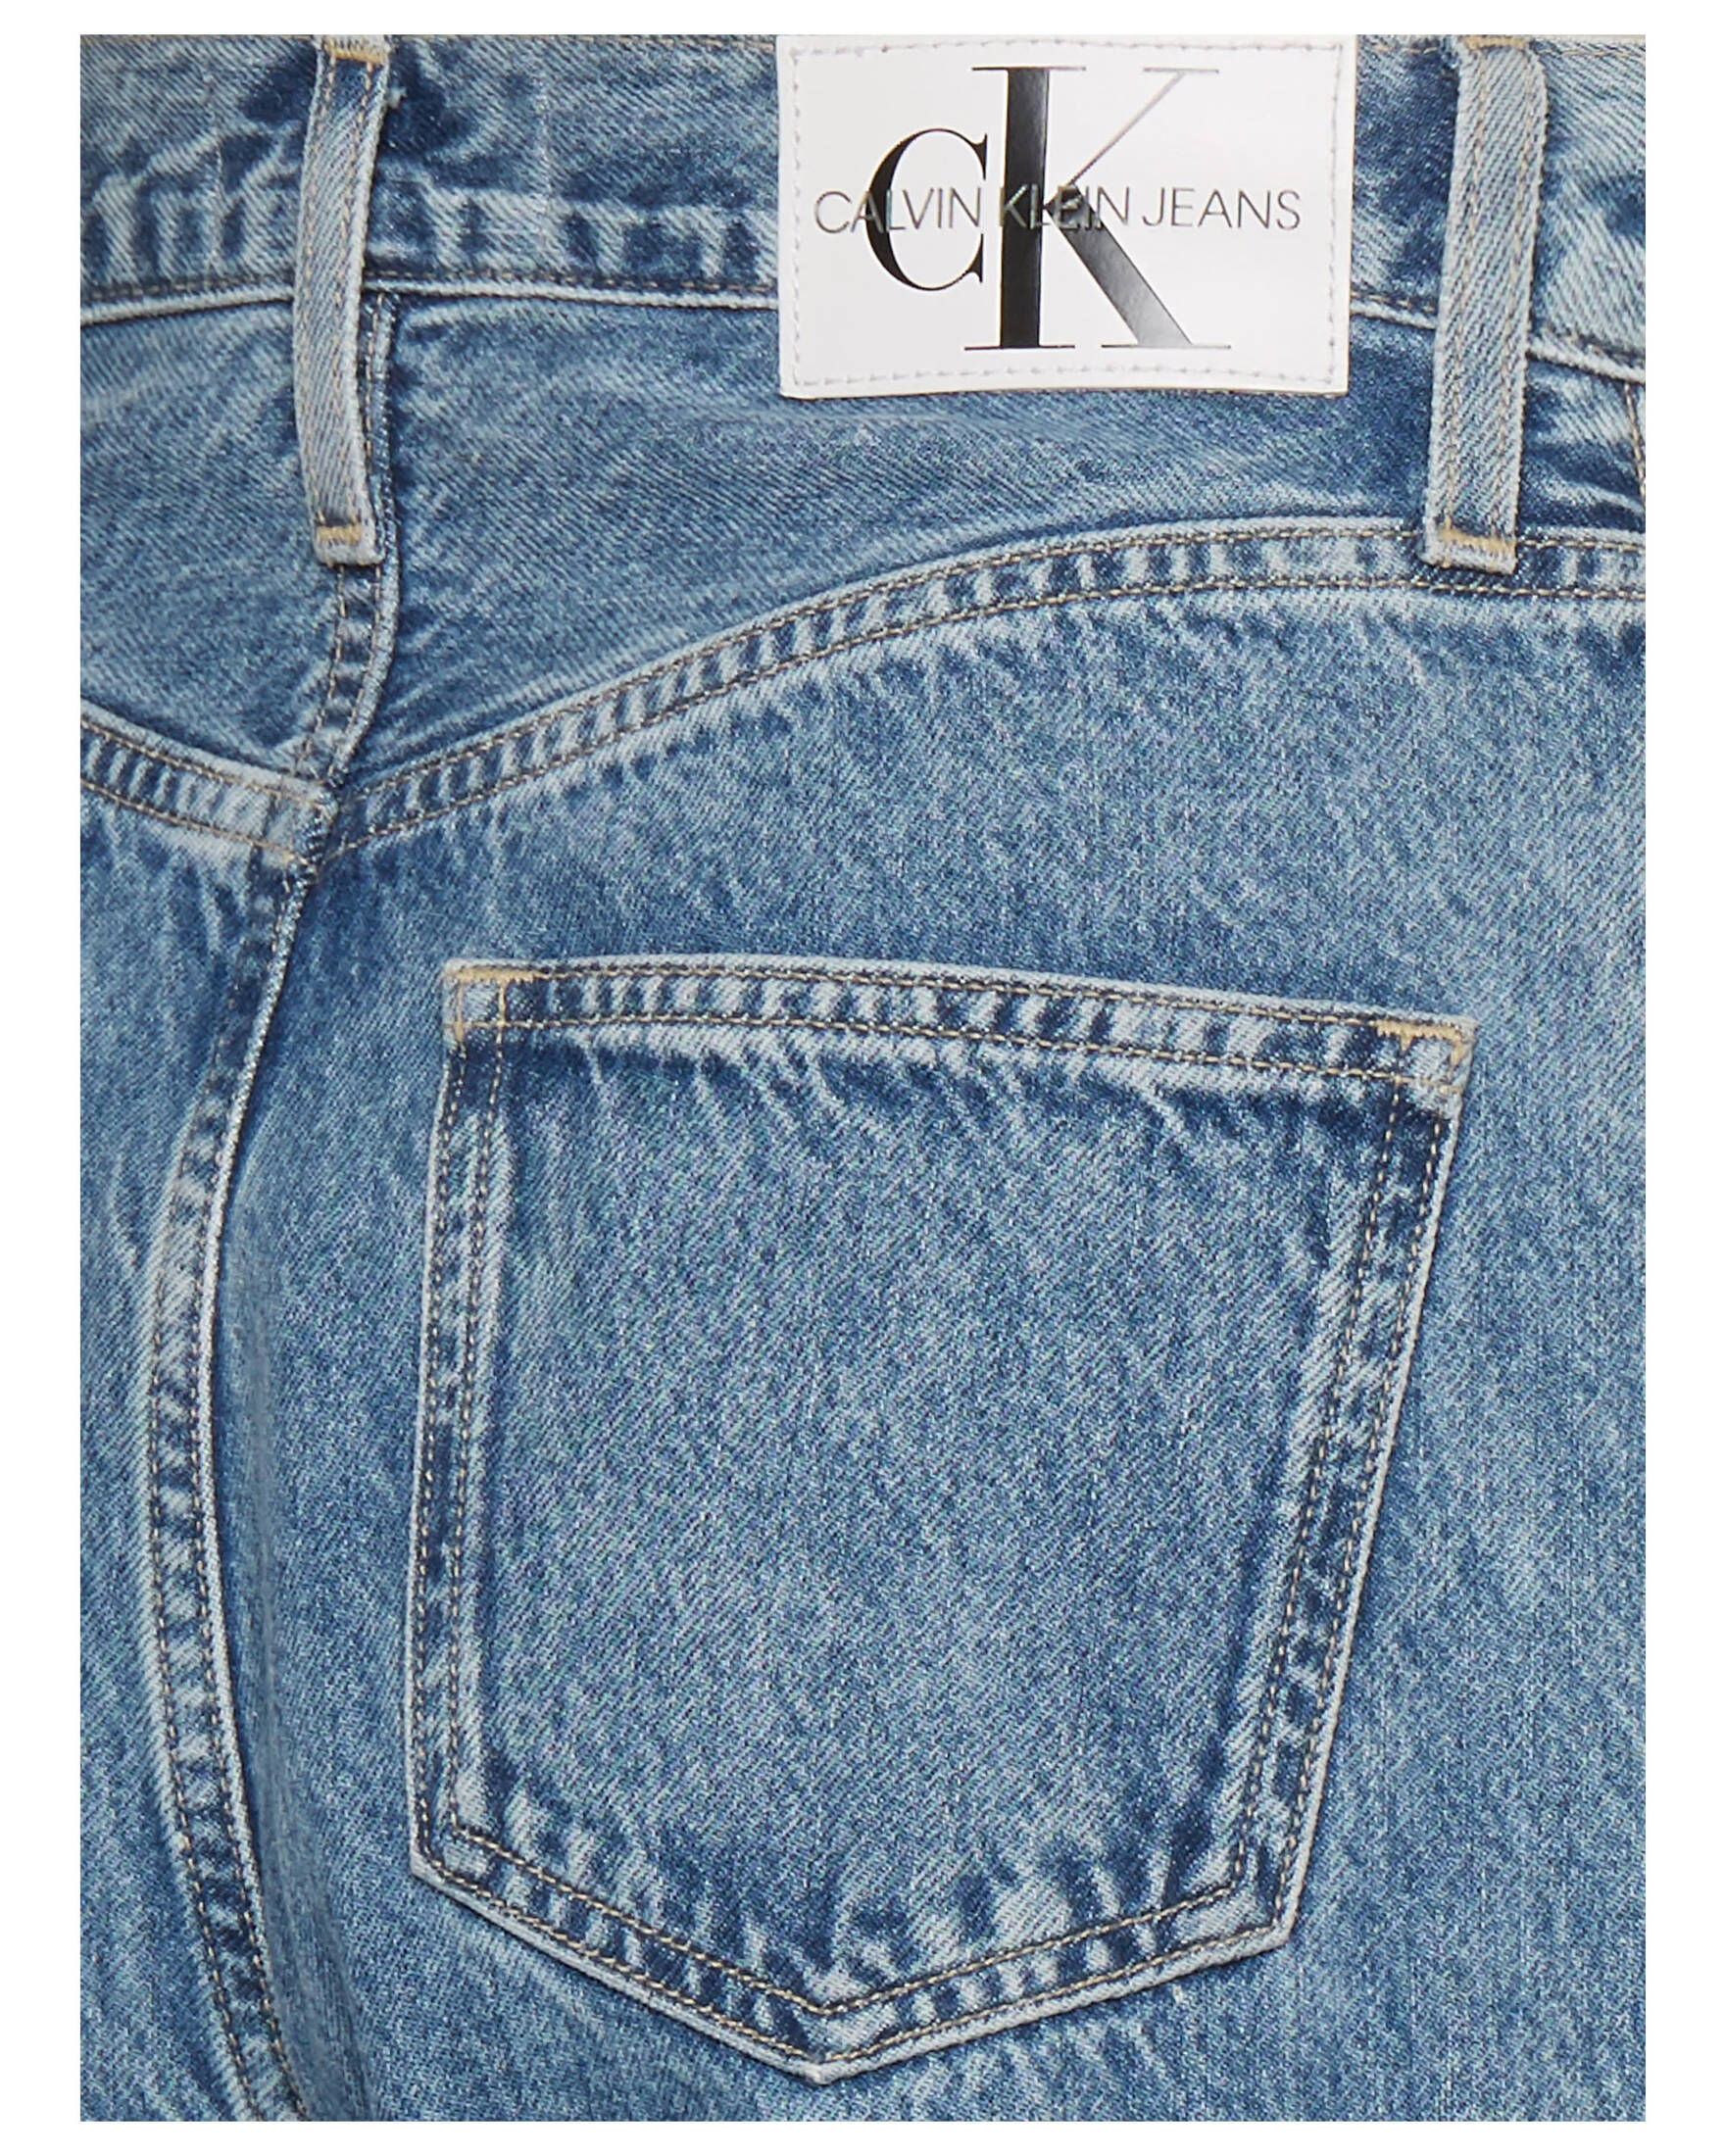 CALVIN KLEIN JEANS Damen Jeans Relaxed Fit kaufen | engelhorn